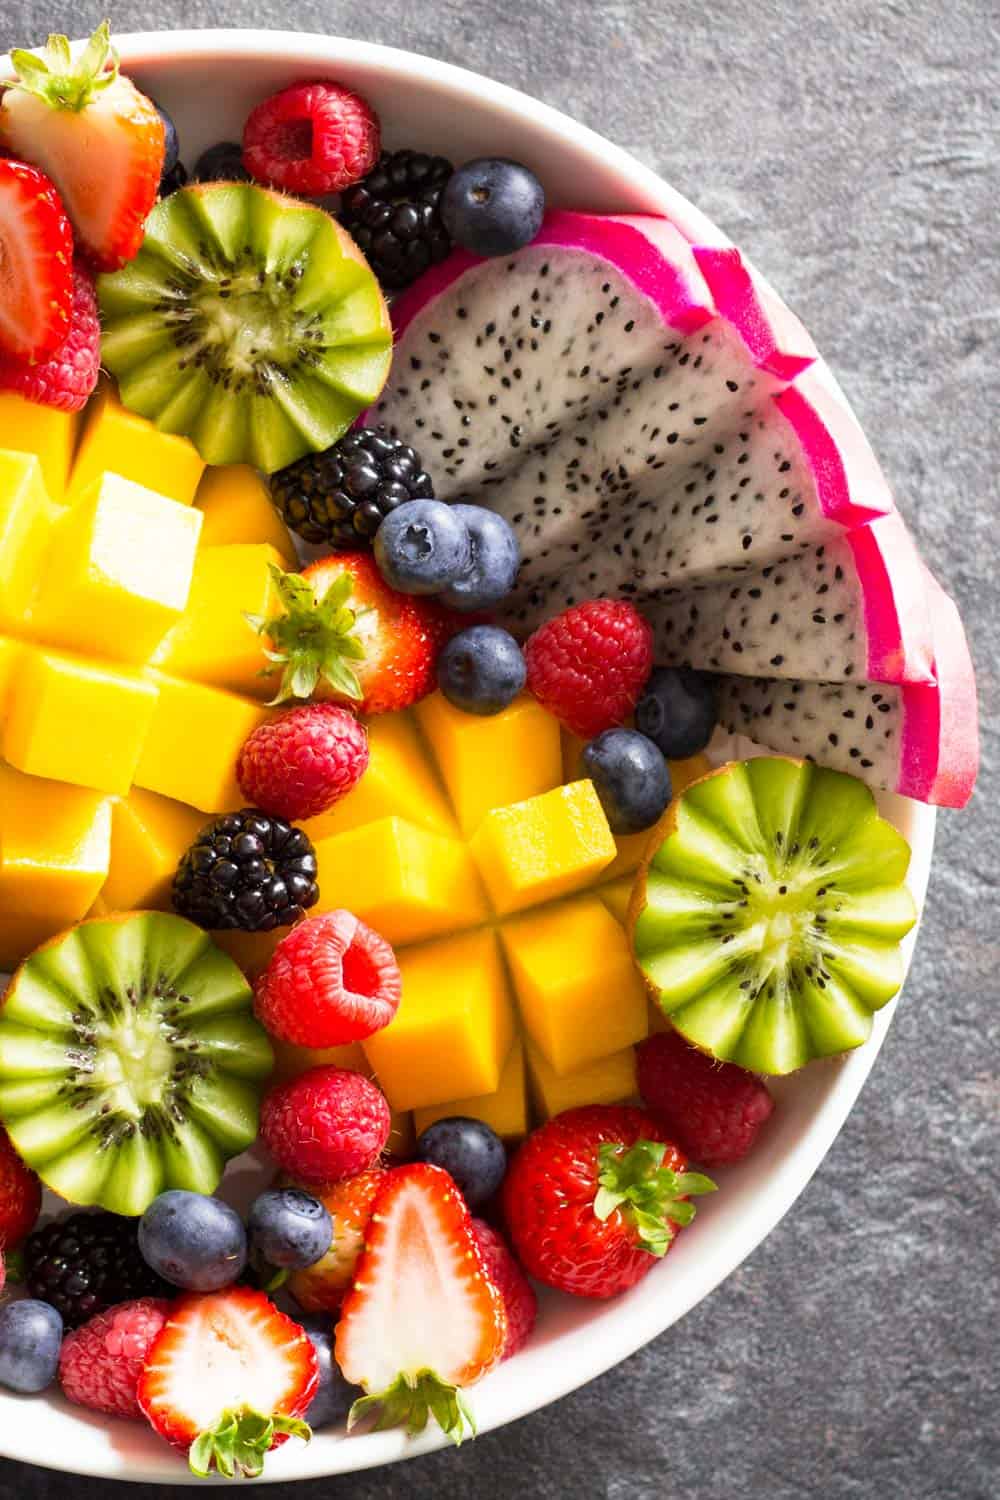 Detail of fruit platter which includes strawberries, raspberries, blueberries, blackberries, kiwis, dragon fruit, and mango.